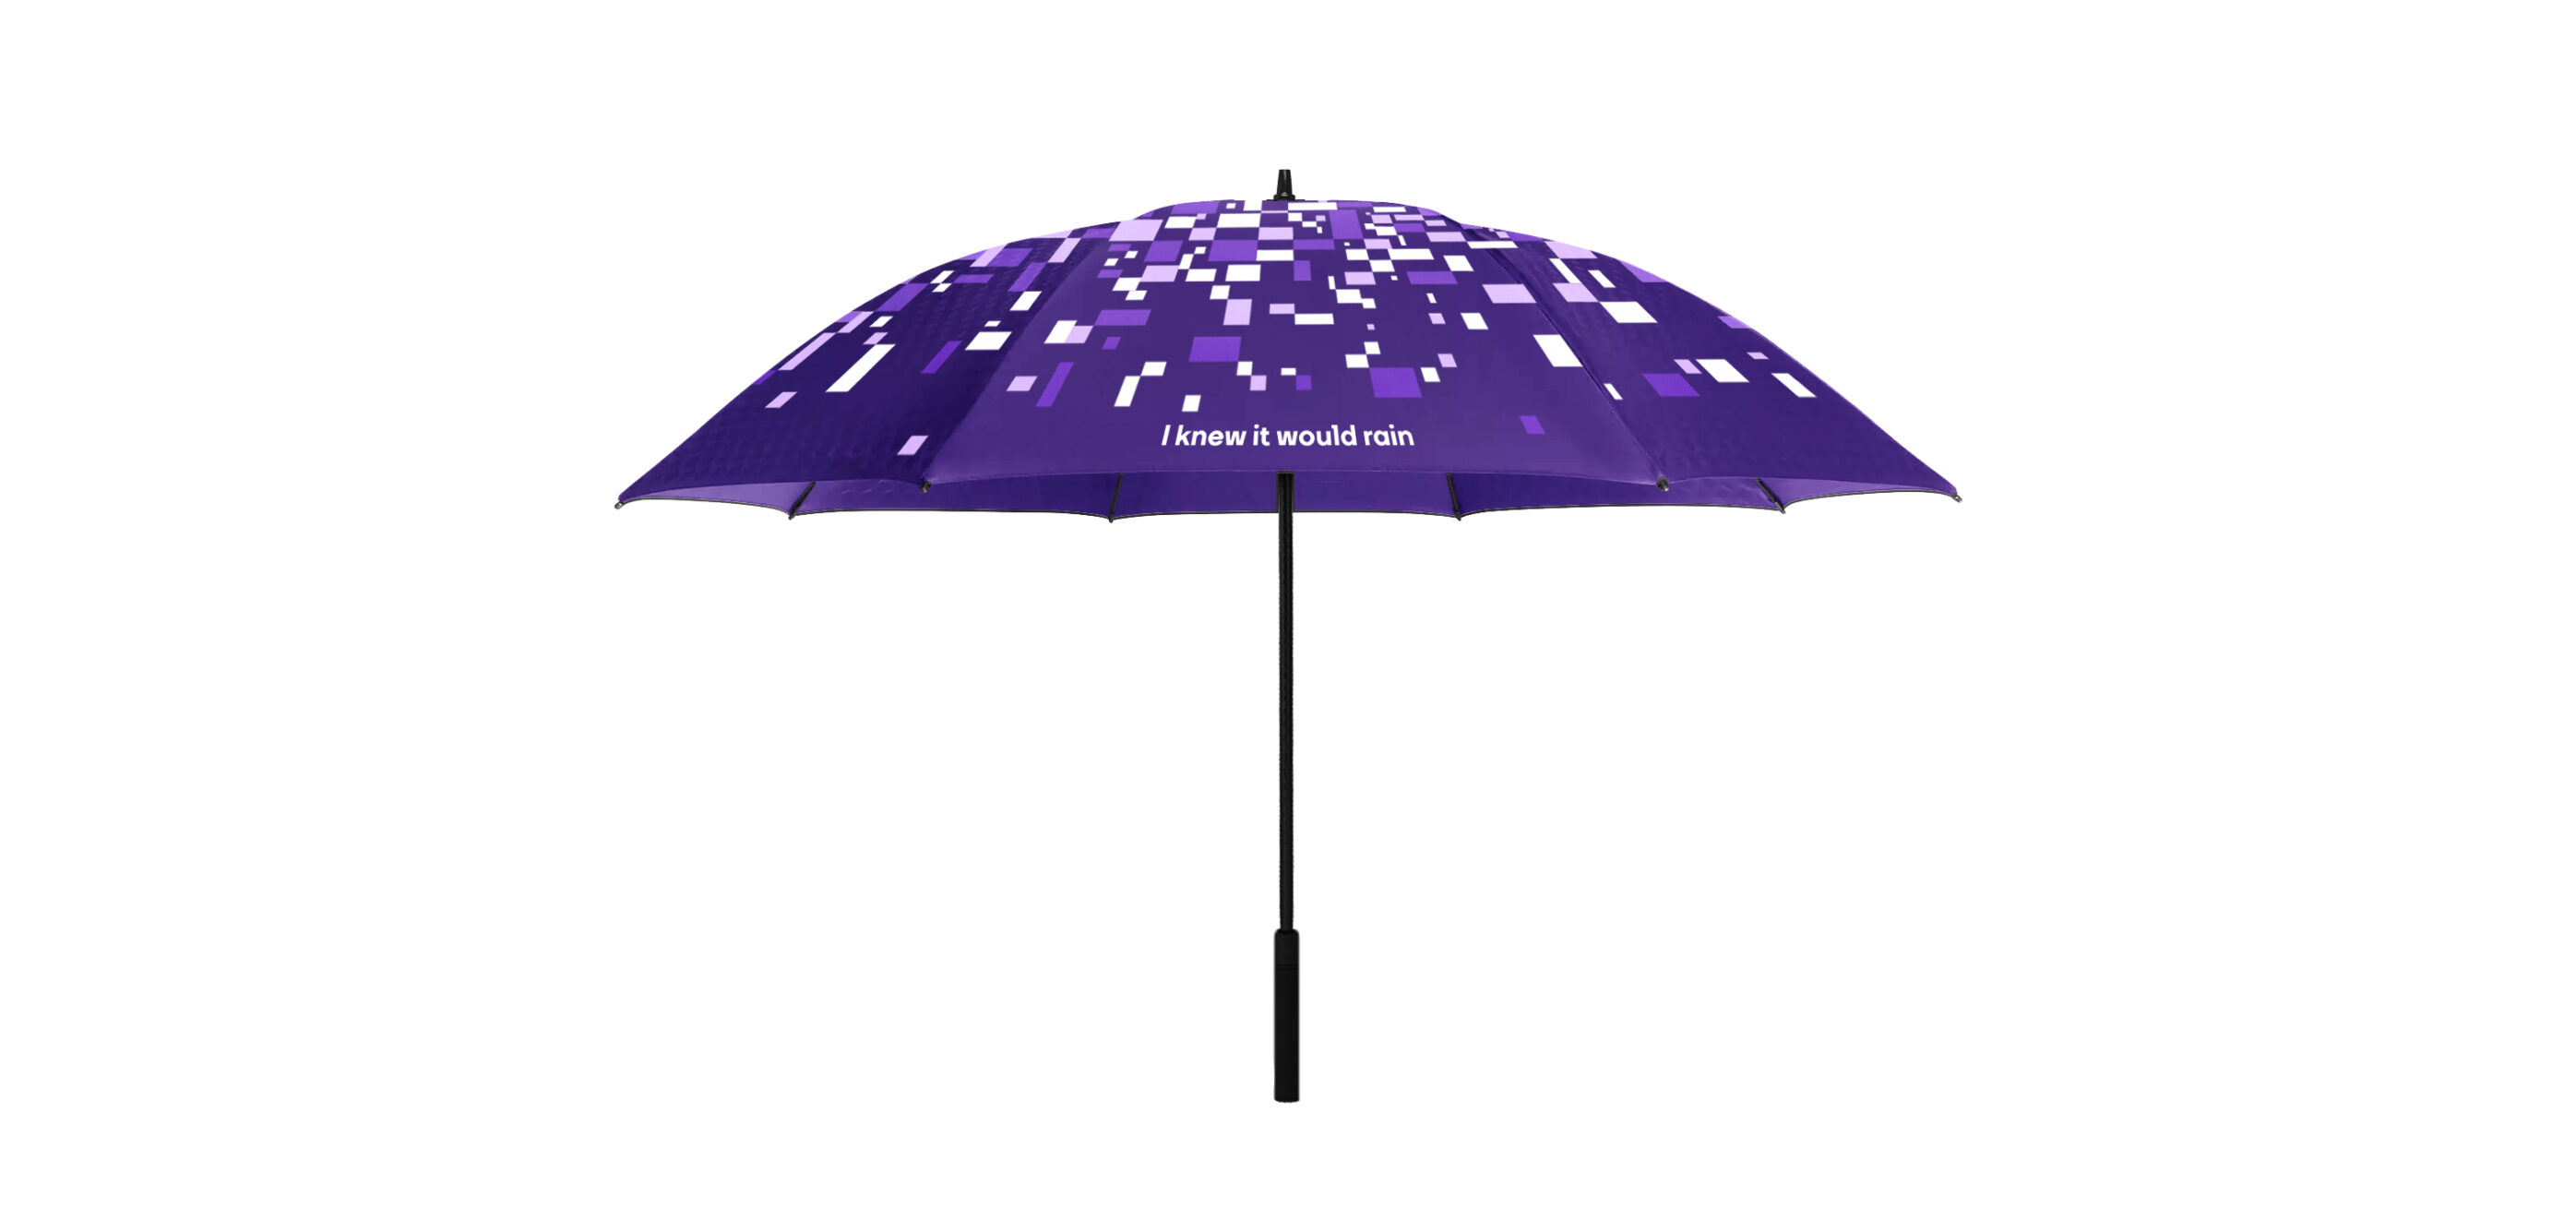 Data analytics company branded umbrella depicting pixelated graphic rain